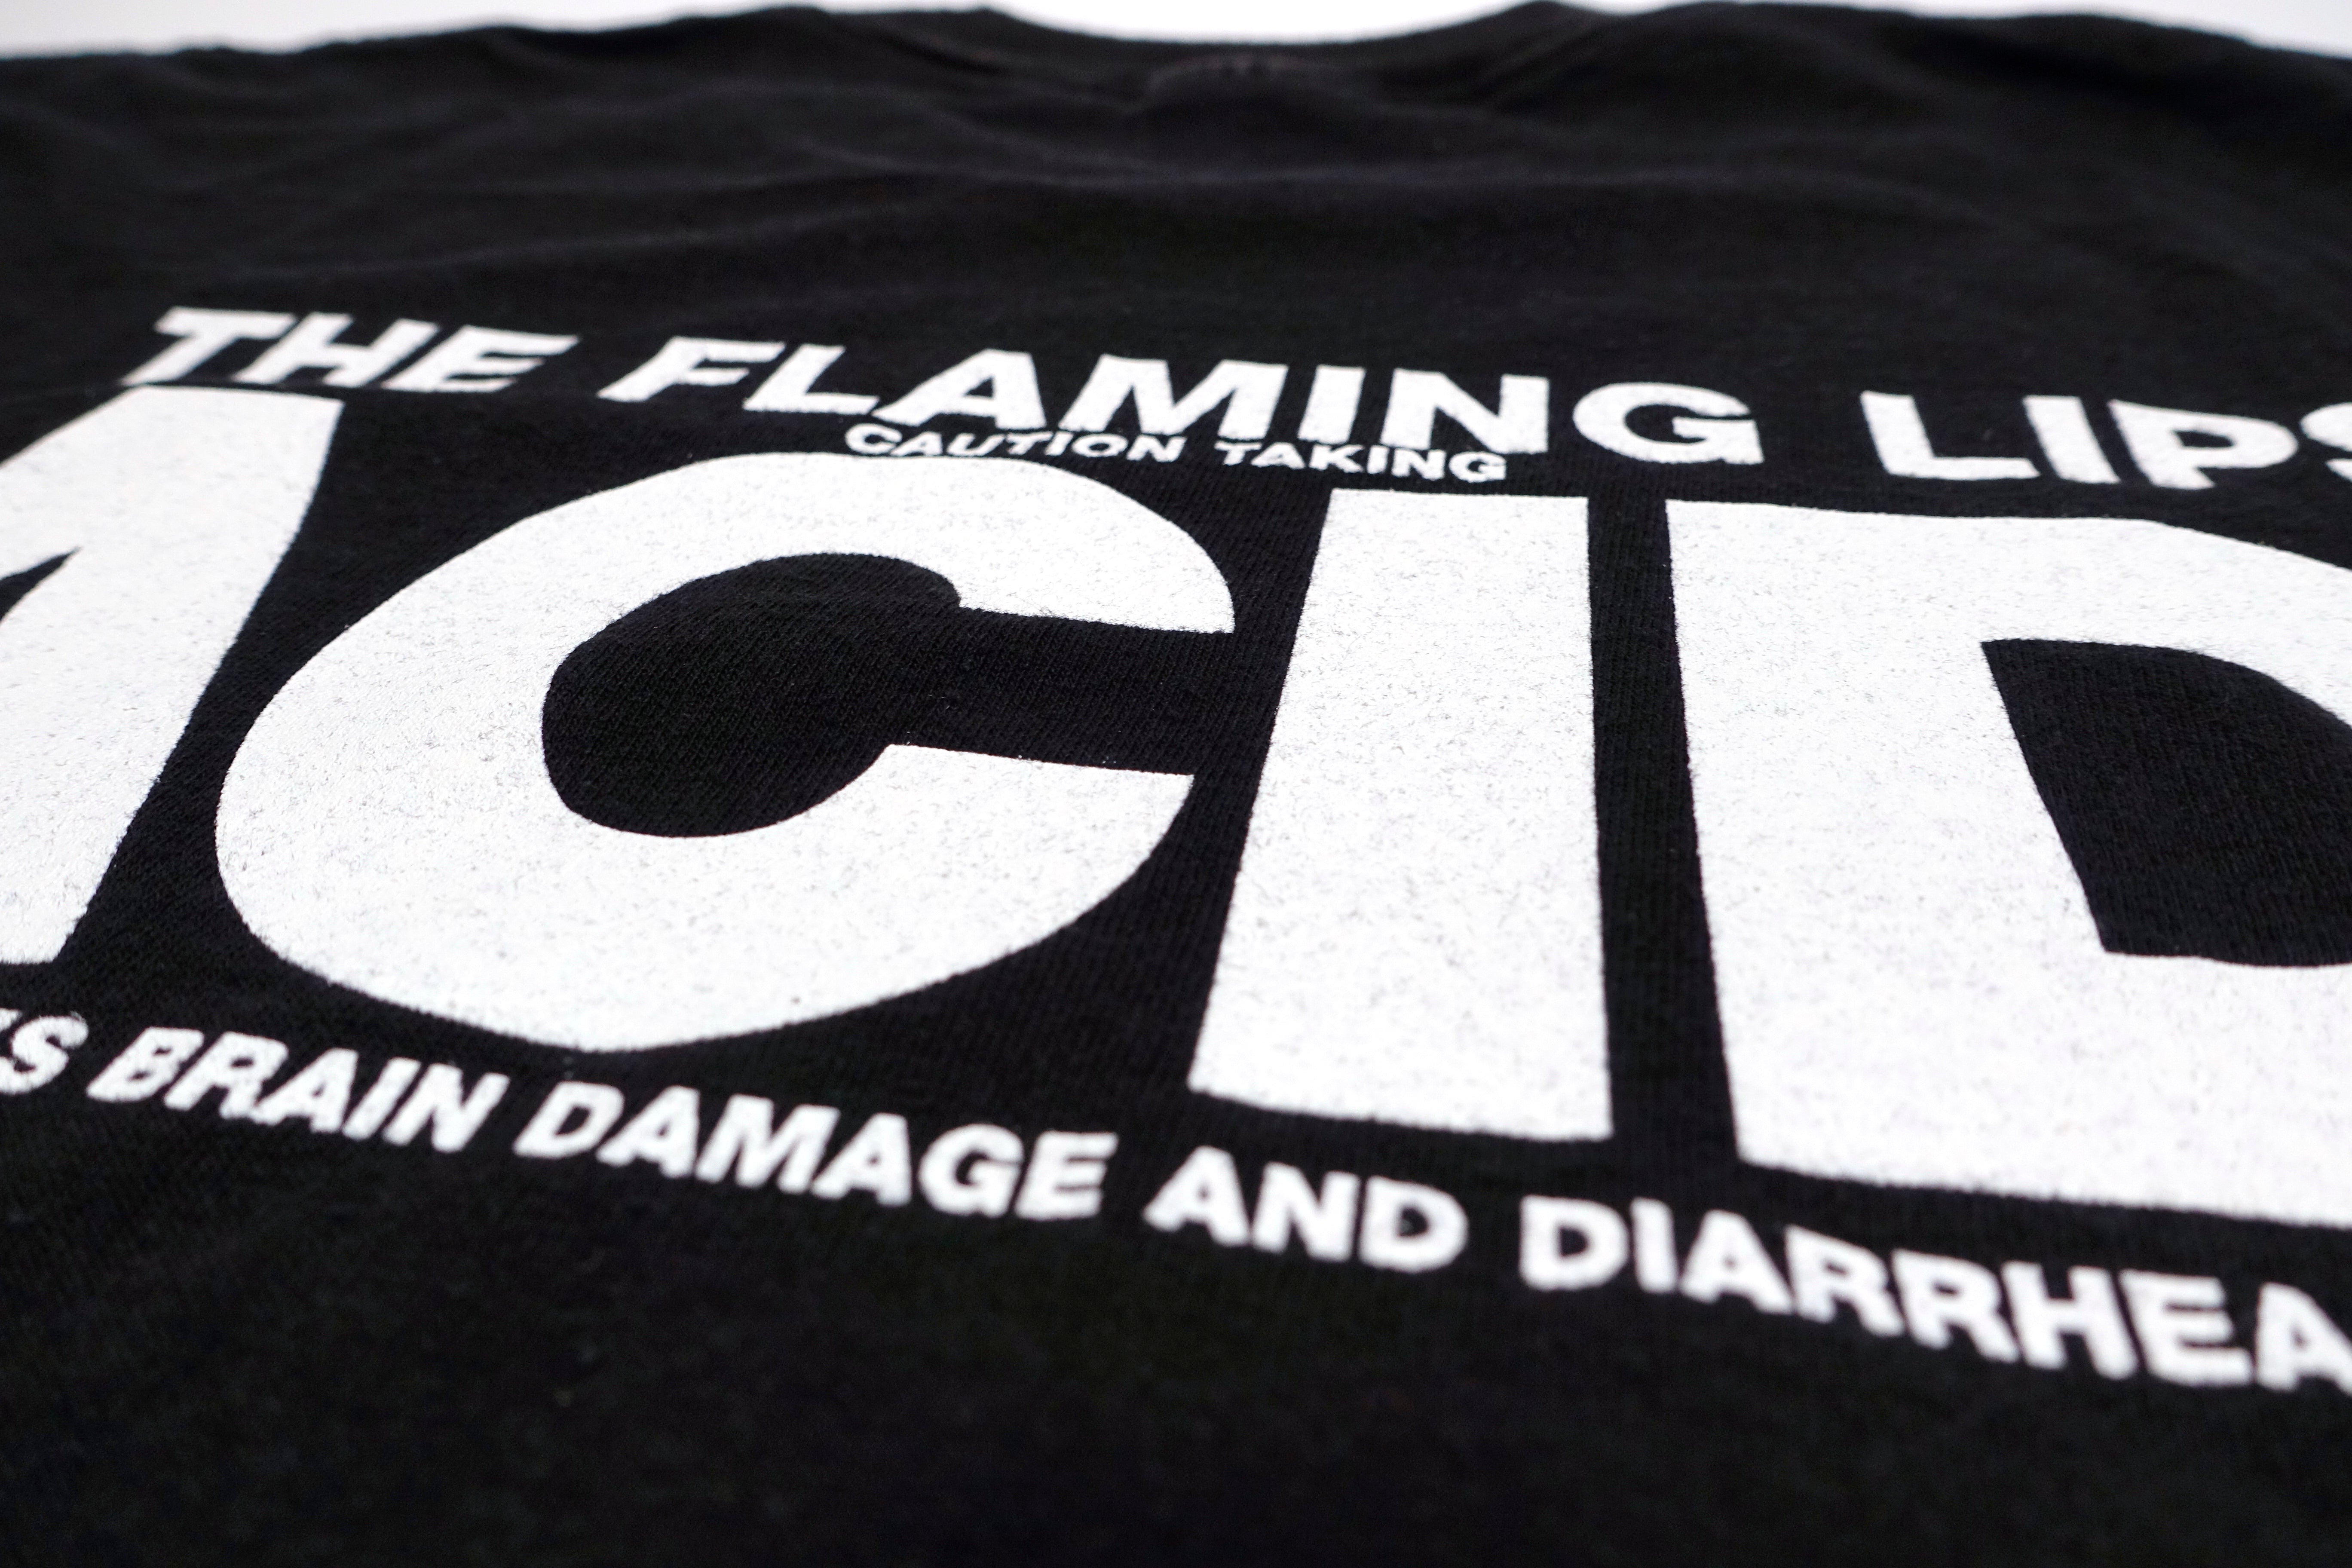 the FlAminG lips - Caution Taking Acid Causes Brain Damage Tour Shirt Size XL